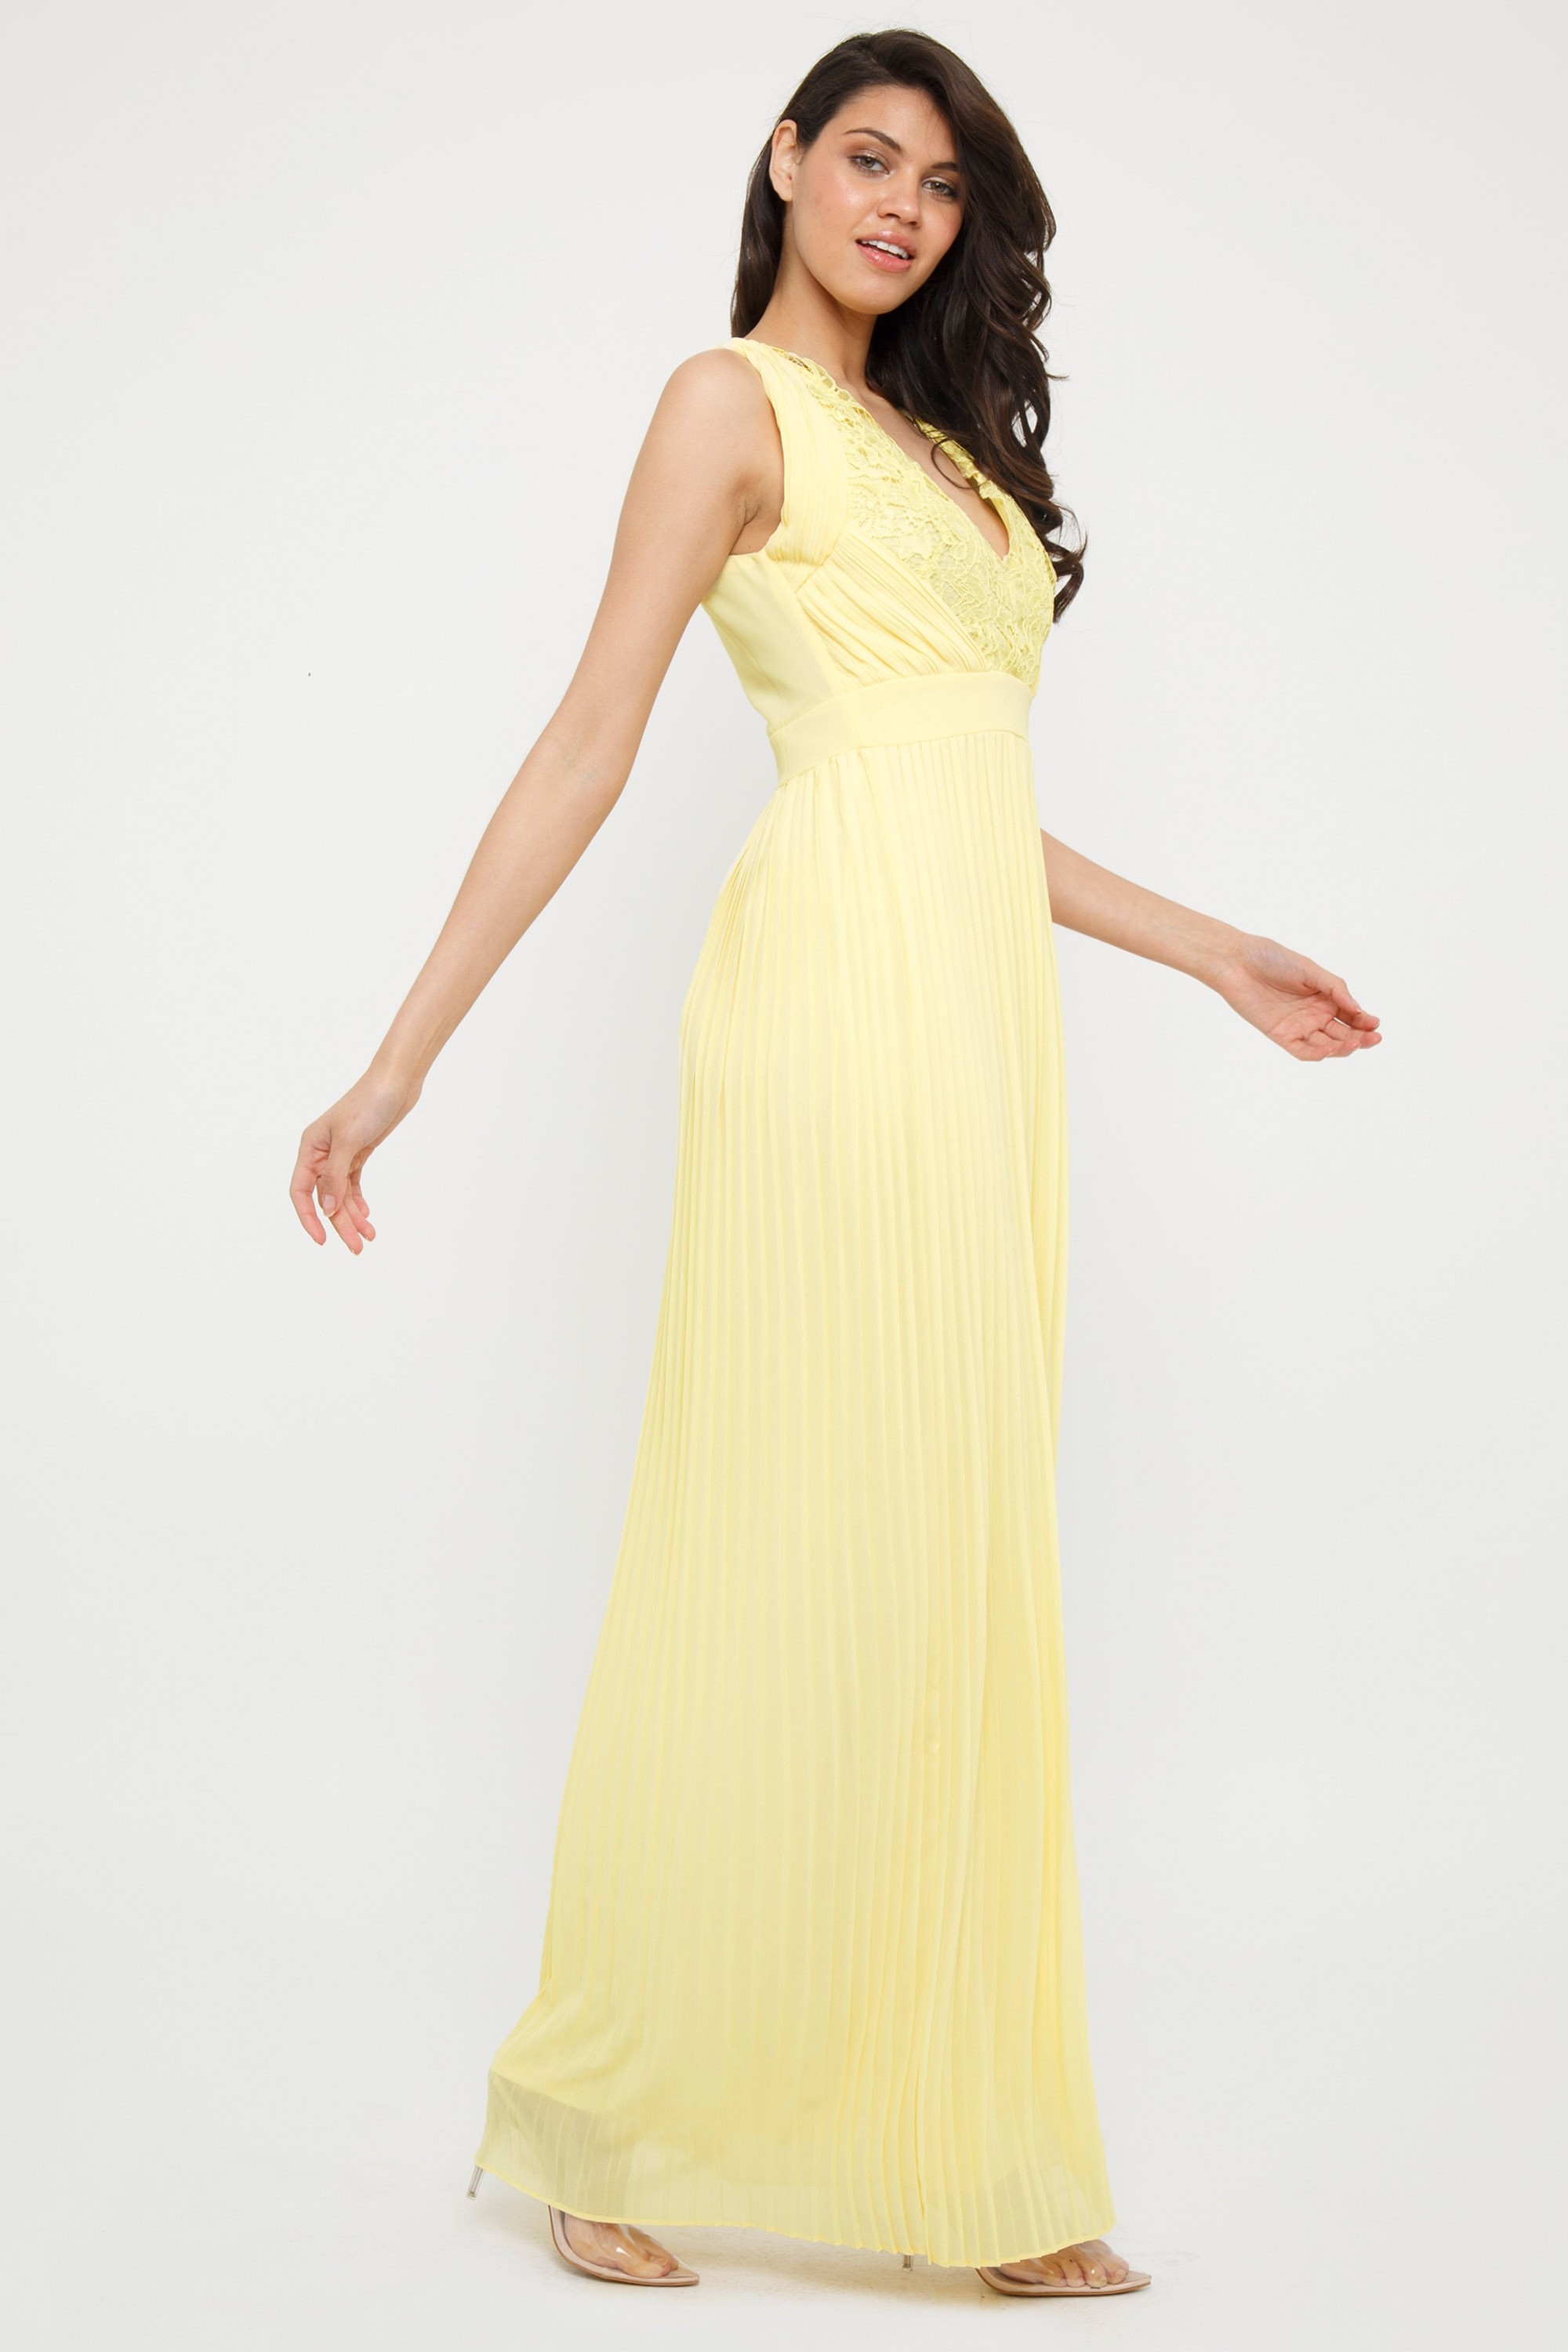 Pastel Yellow Bridesmaid Dresses Uk - nelsonismissing